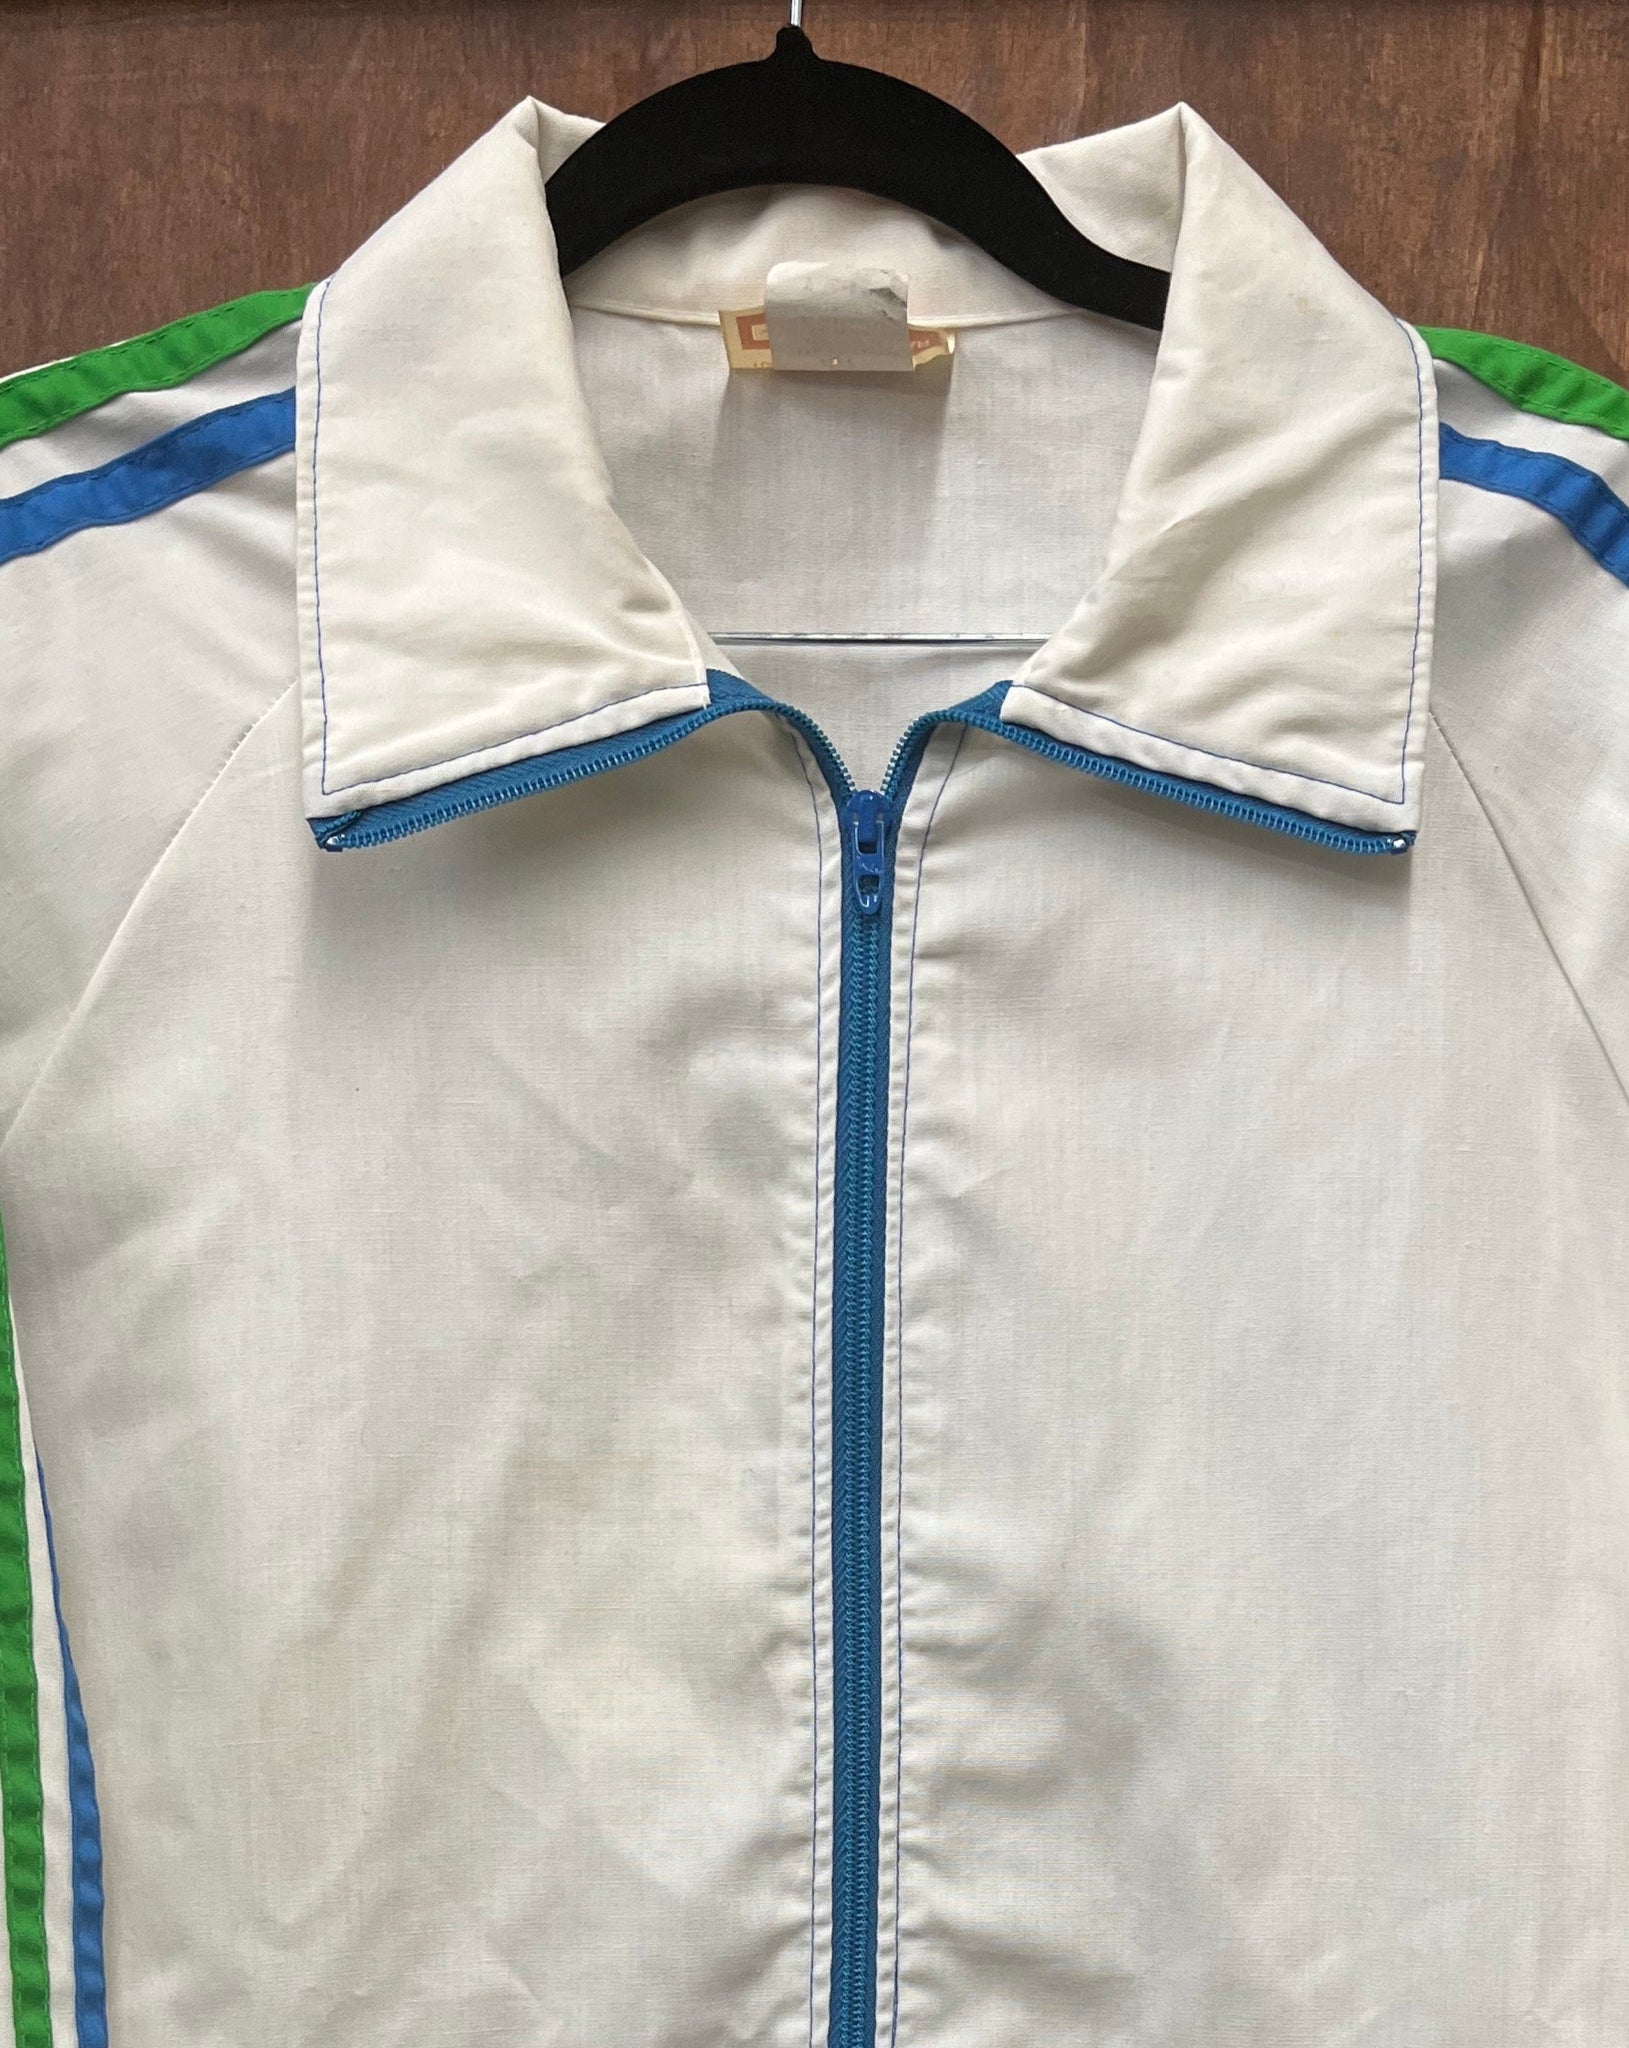 1960s MENS JACKET- Sears Active Wear white light zip up w/ green&blue trim